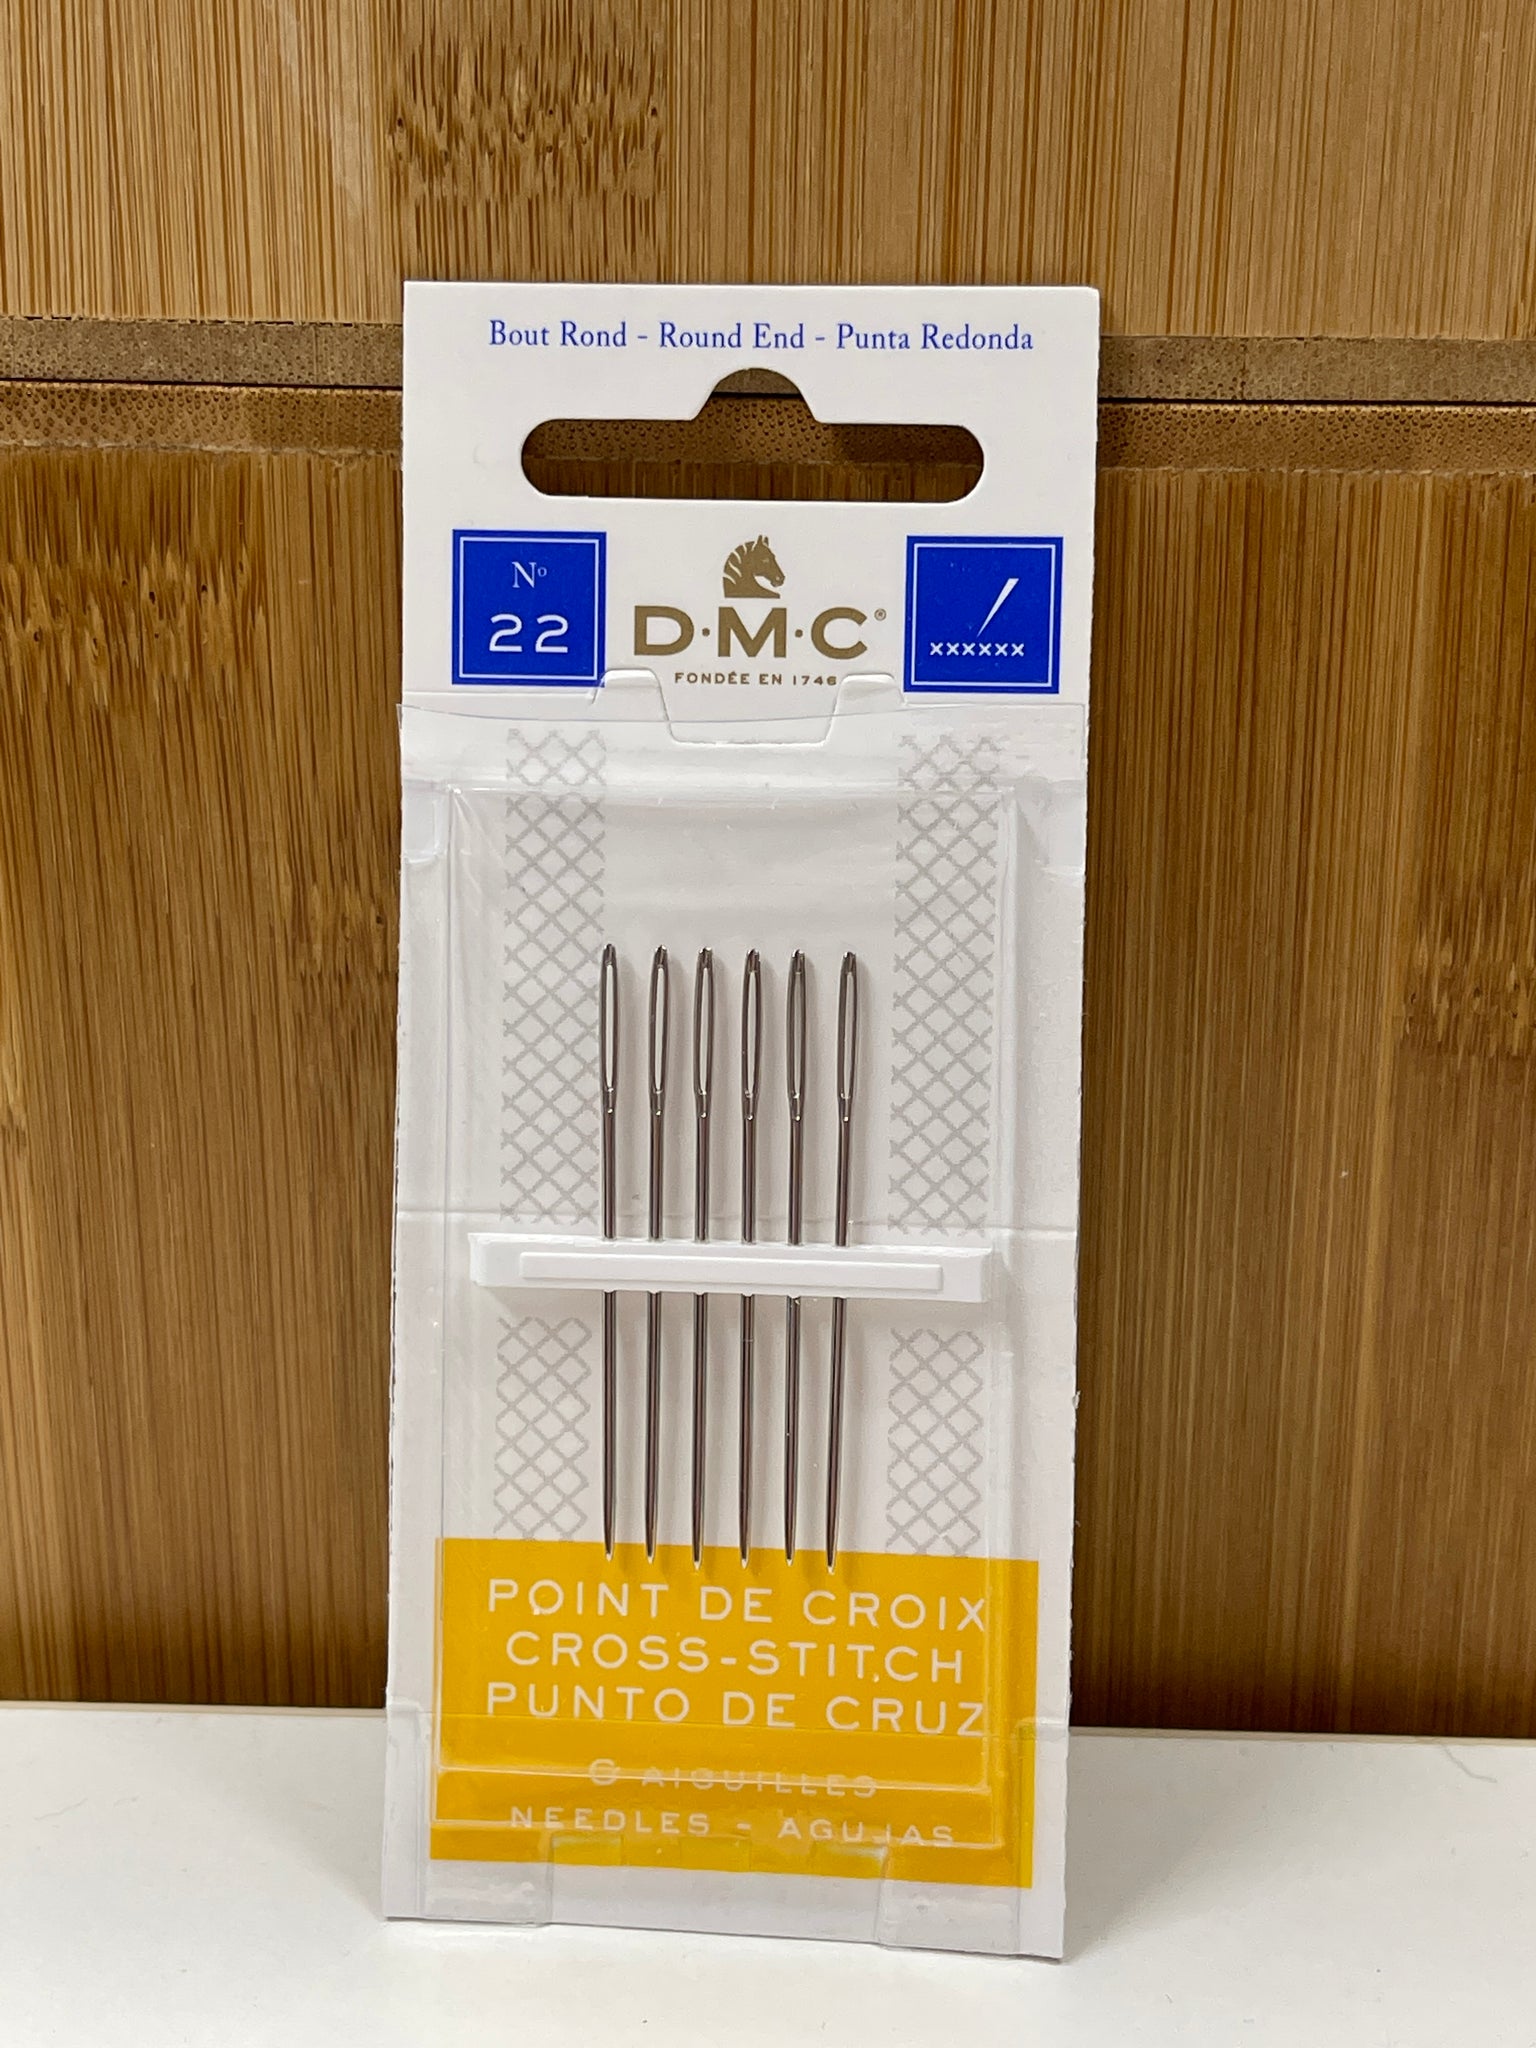  DMC Size 24 Cross Stitch Needles